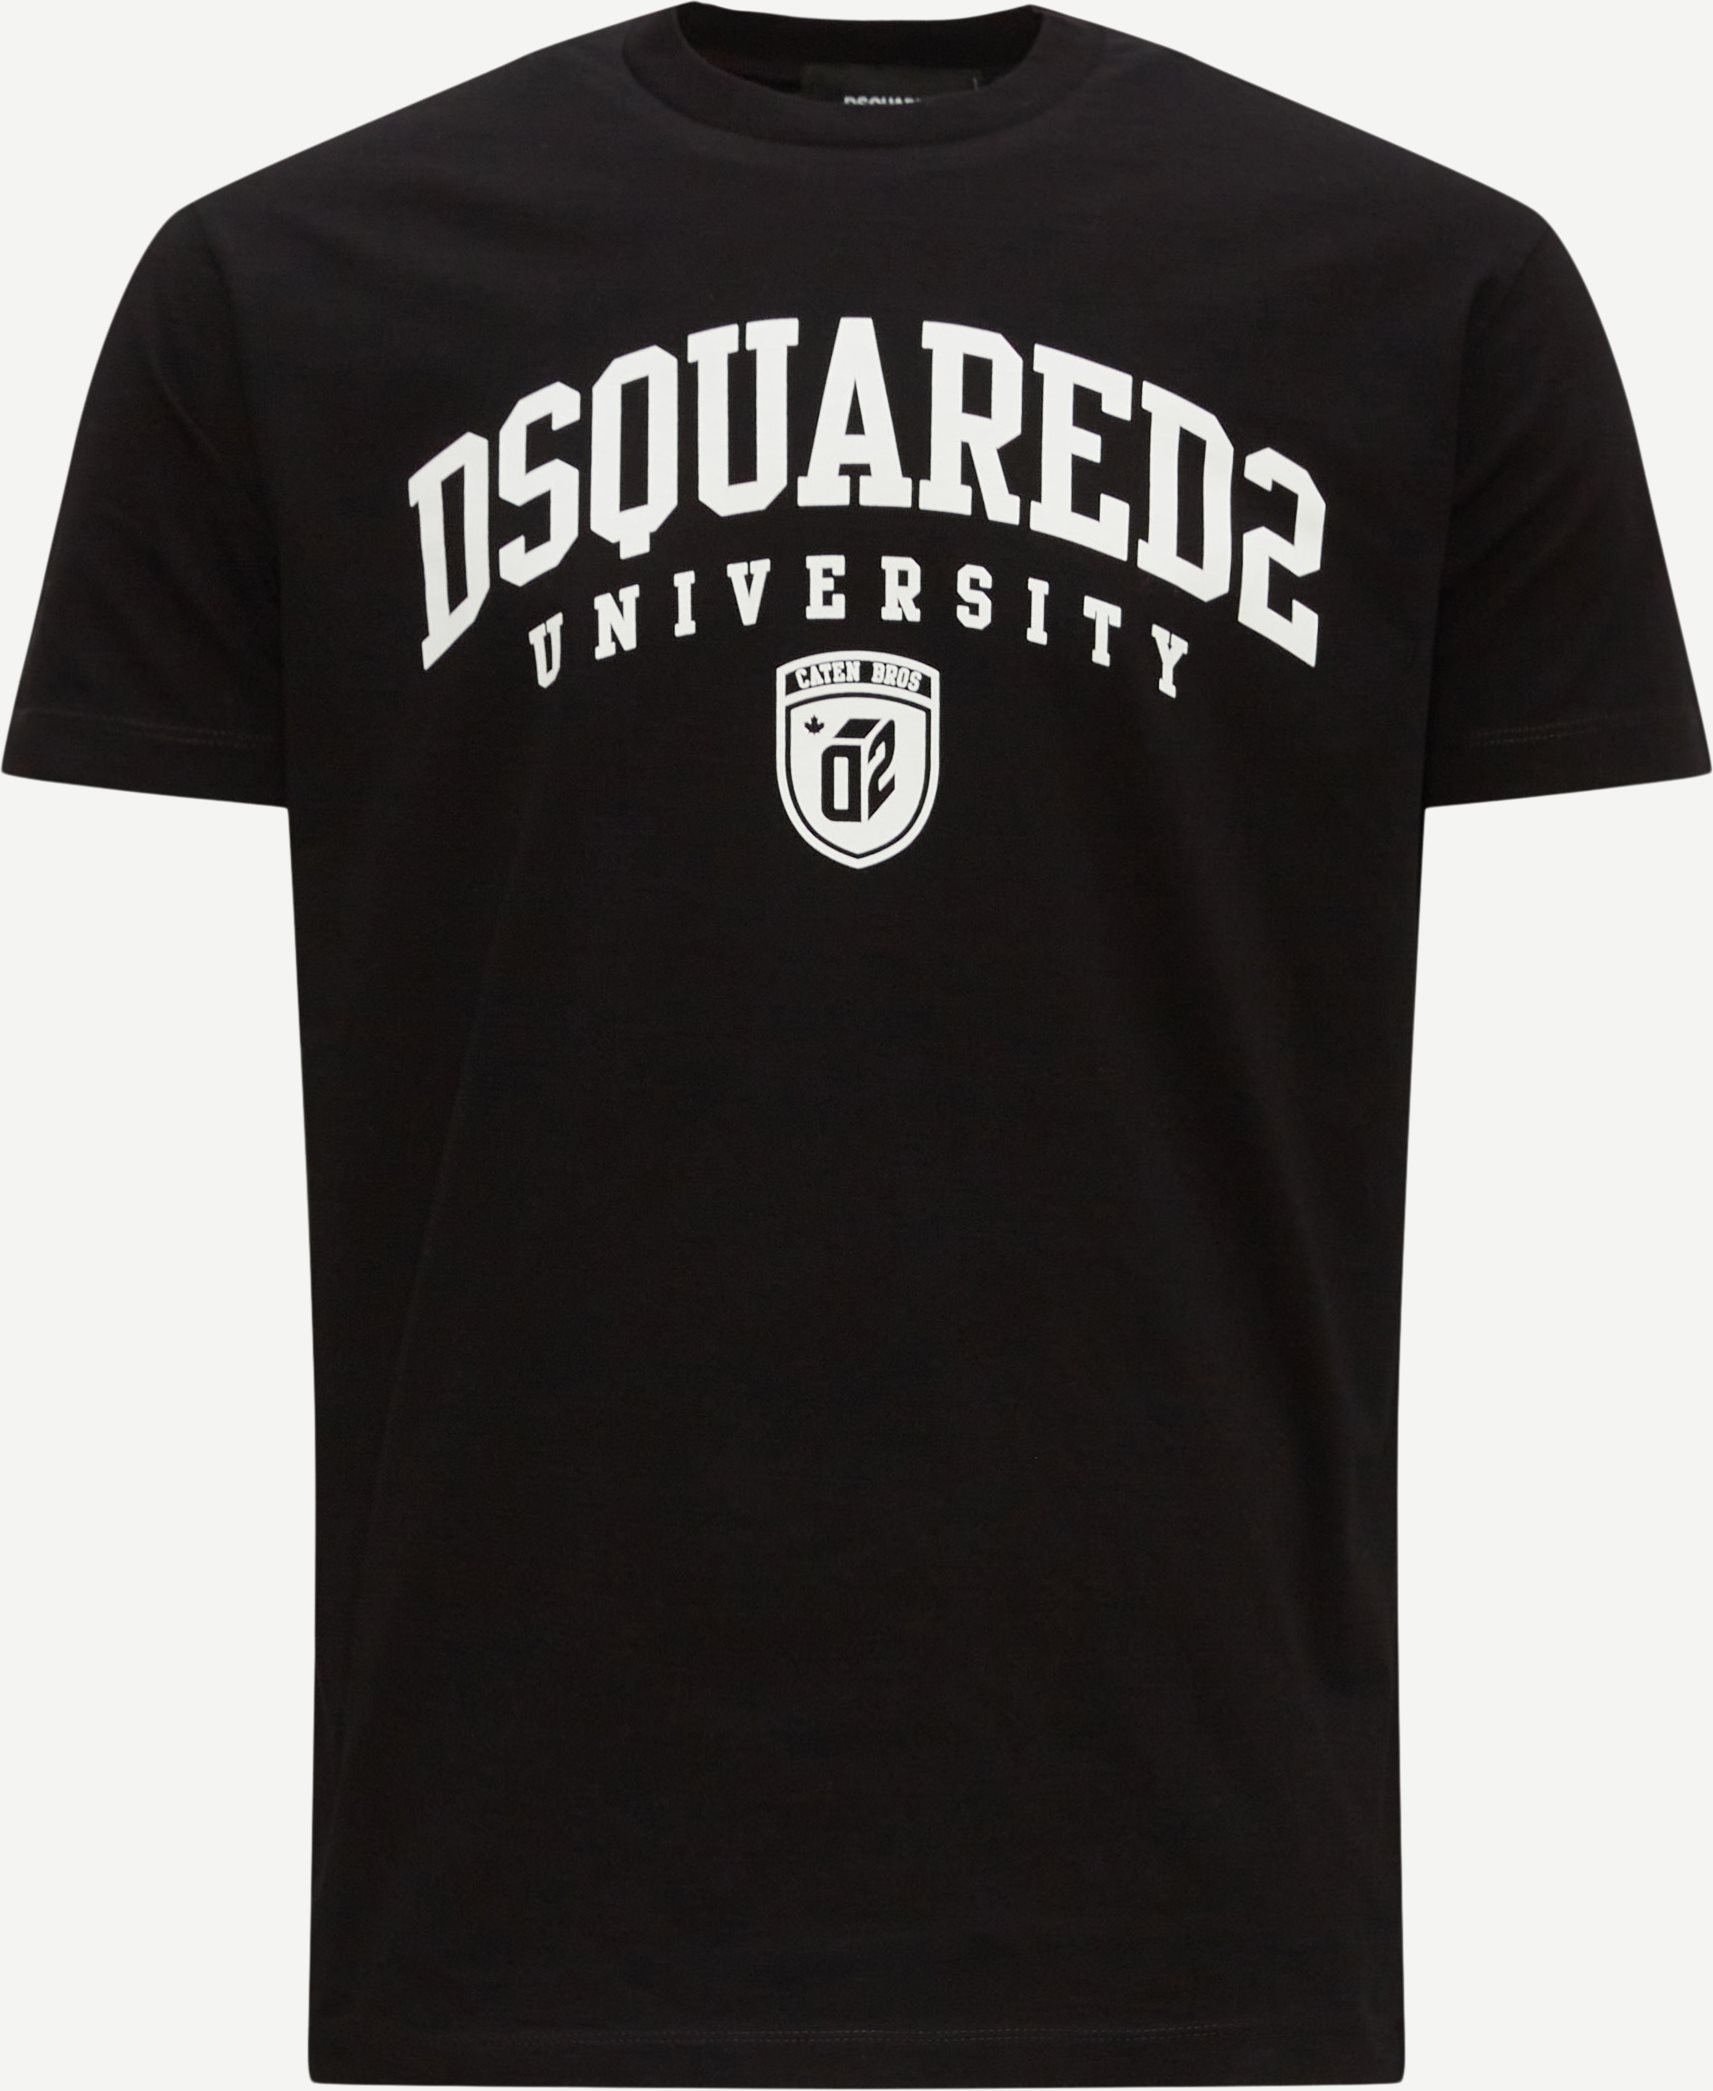 Dsquared2 T-shirts S74GD1166 S23009 Black